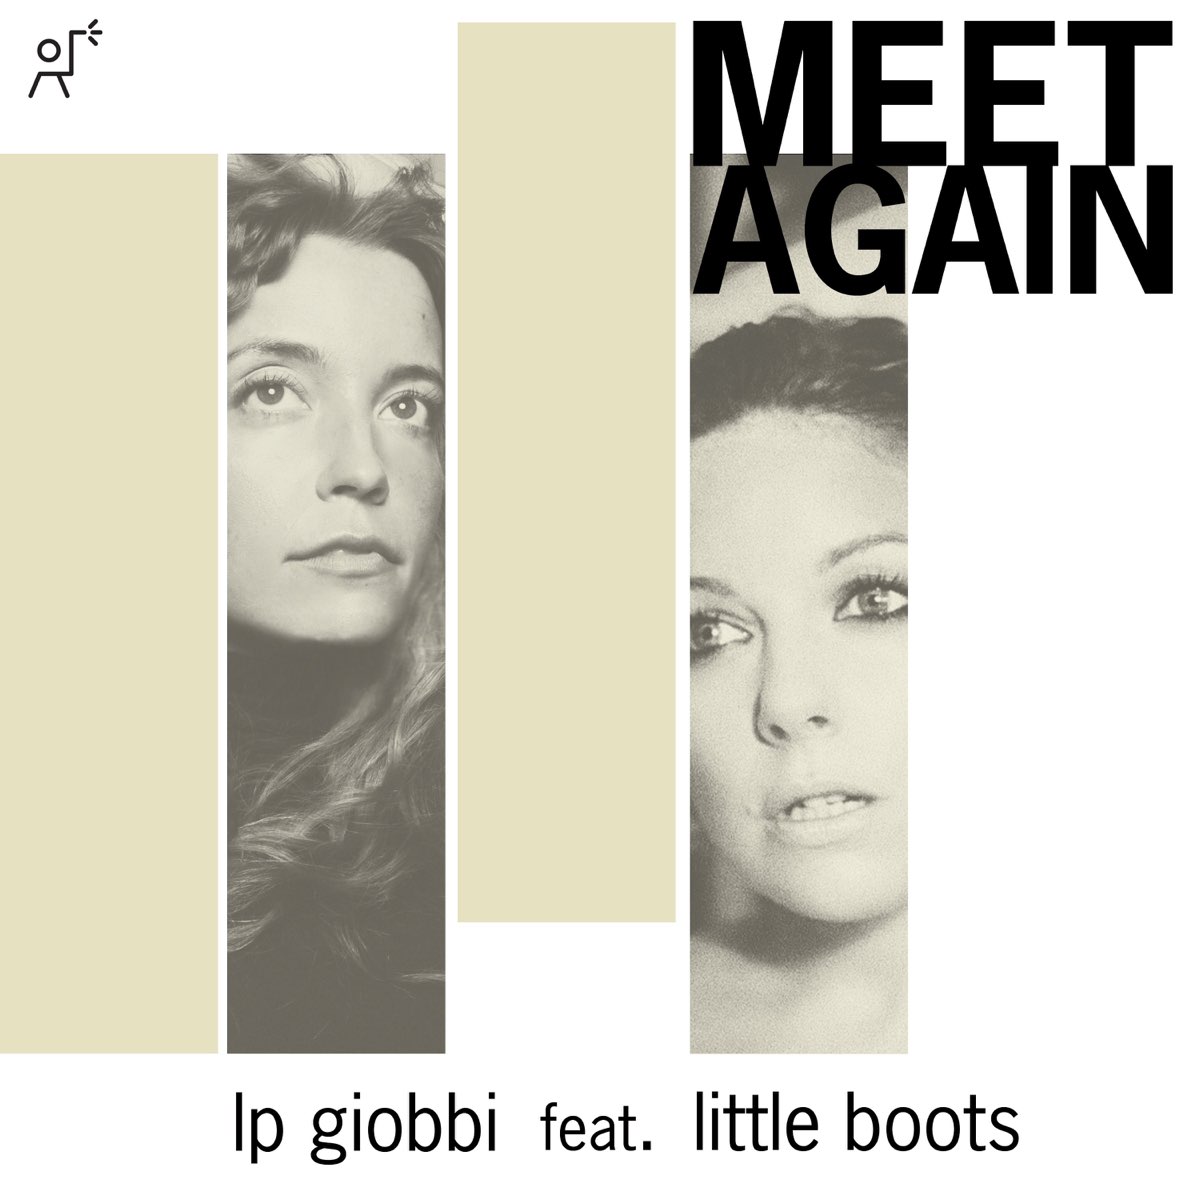 LP Giobbi ft. featuring Little Boots Meet Again cover artwork